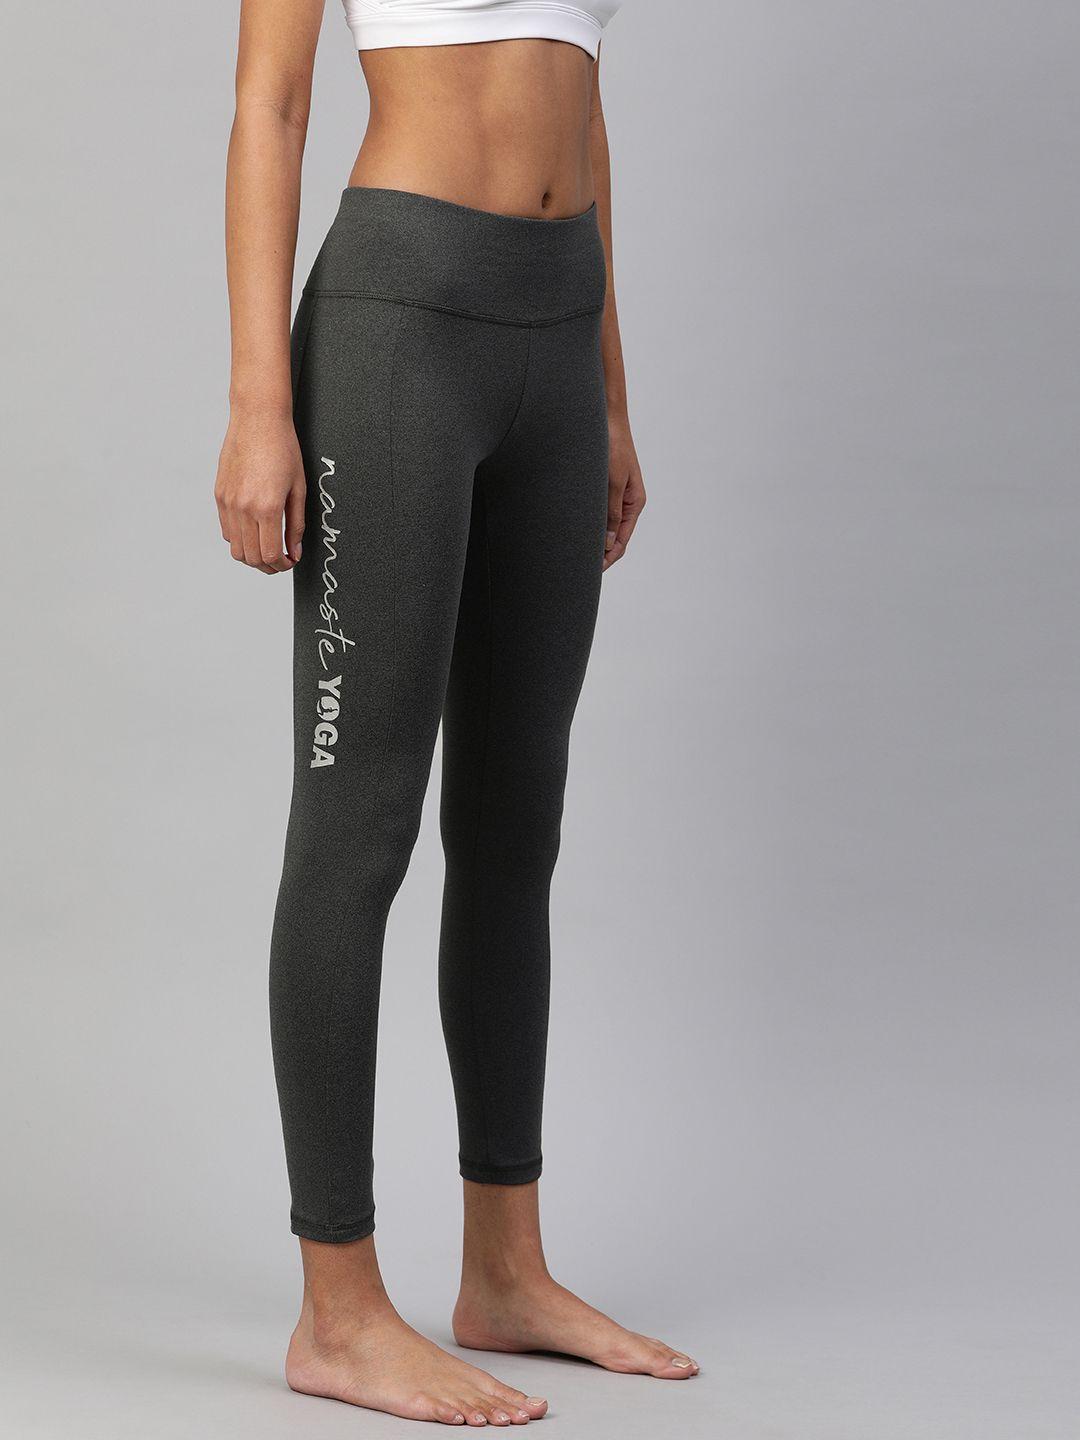 van heusen women yoga spirit cropped tights with print detail